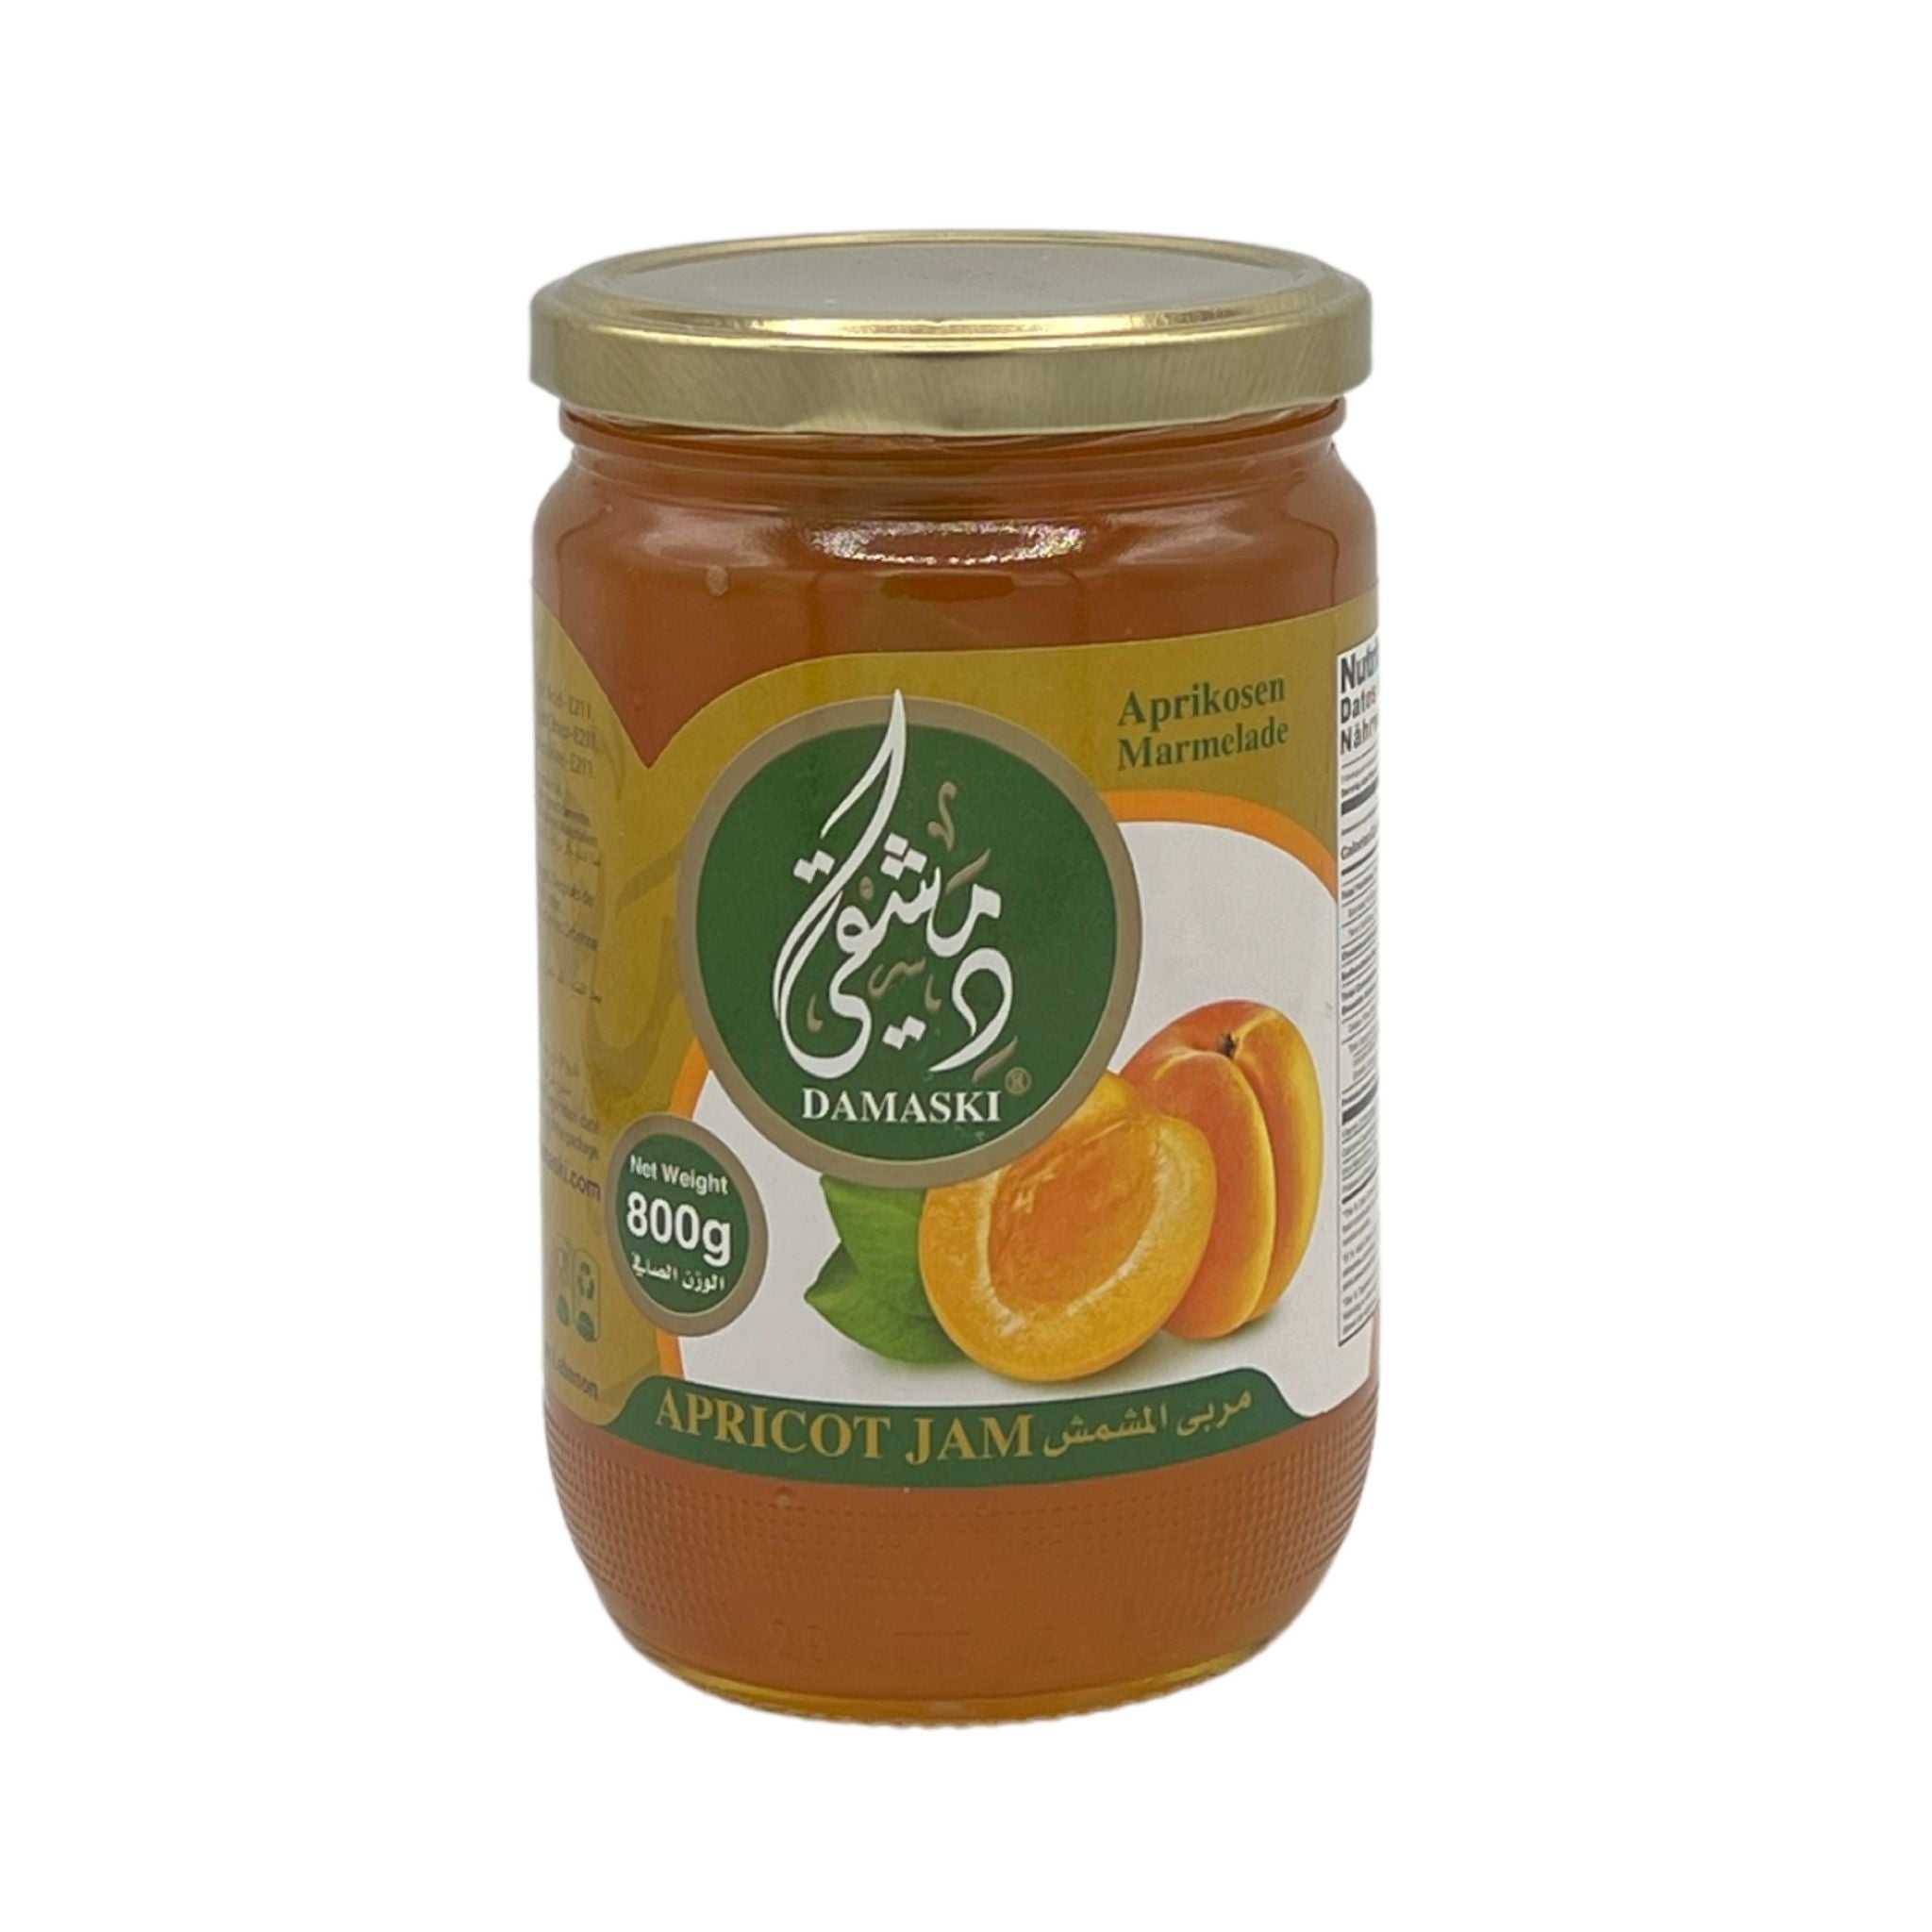 Damaski Apricot Jam 800g